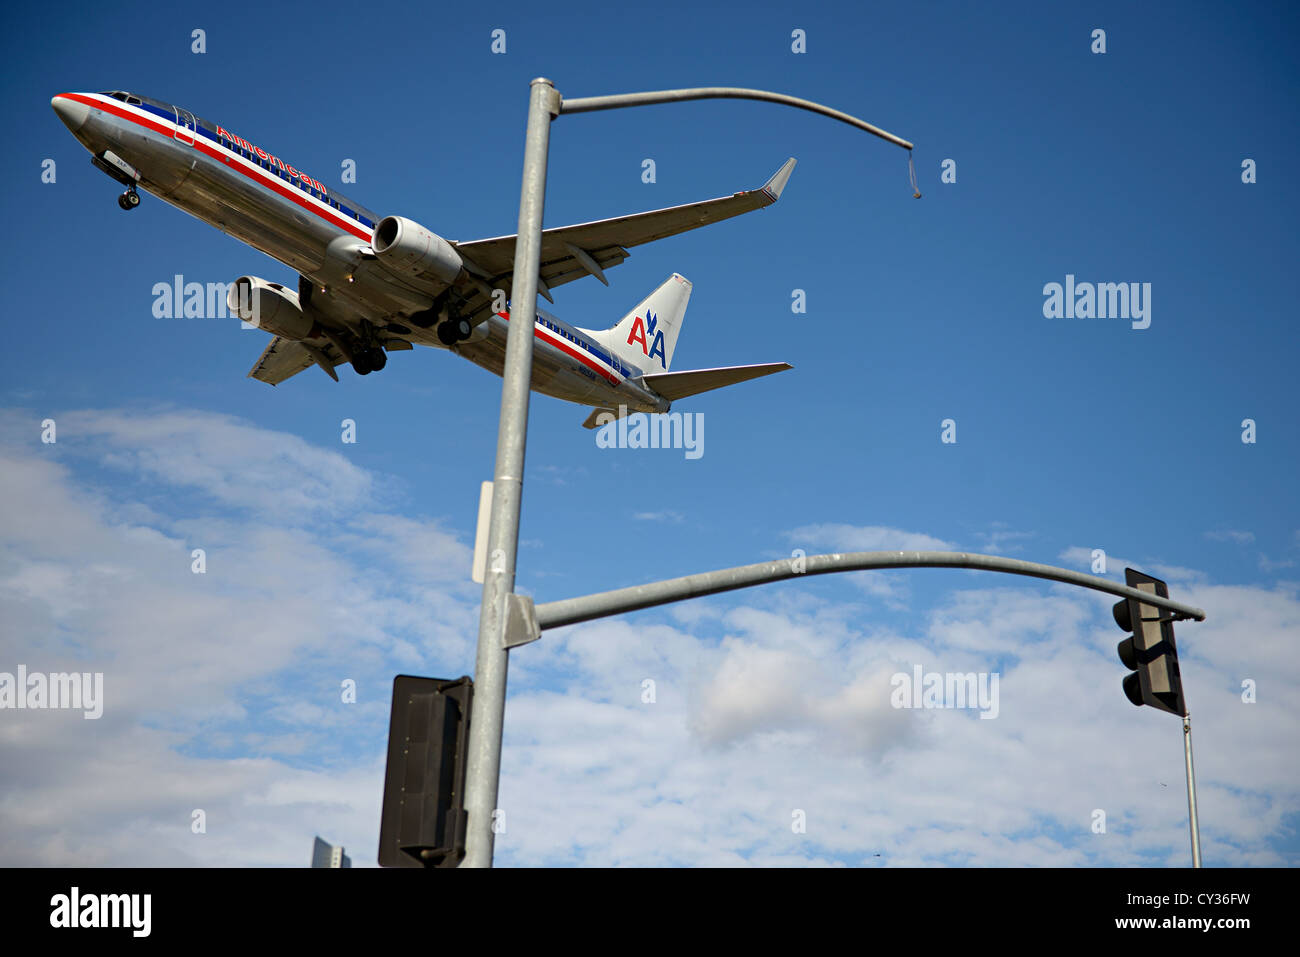 plane lax airport 'los angeles' usa california Stock Photo